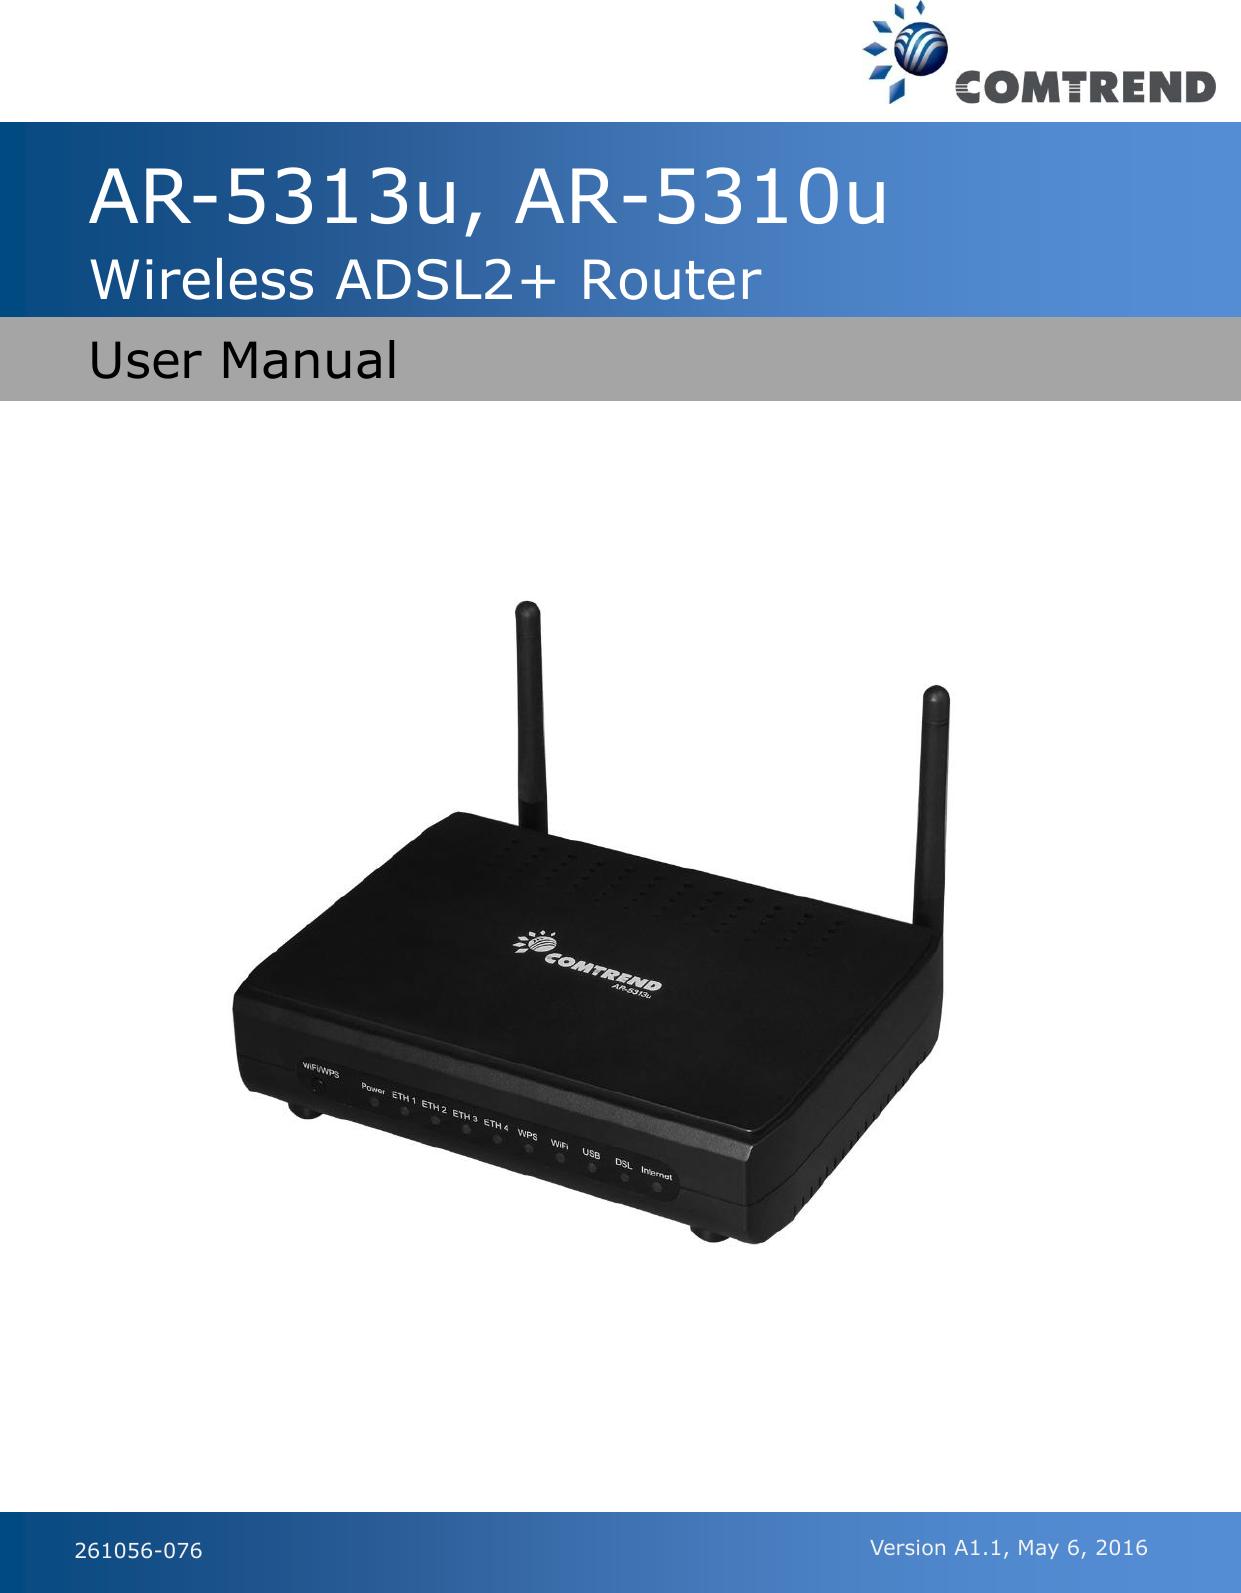       AR-5313u, AR-5310u Wireless ADSL2+ Router   User Manual  261056-076 Version A1.1, May 6, 2016 